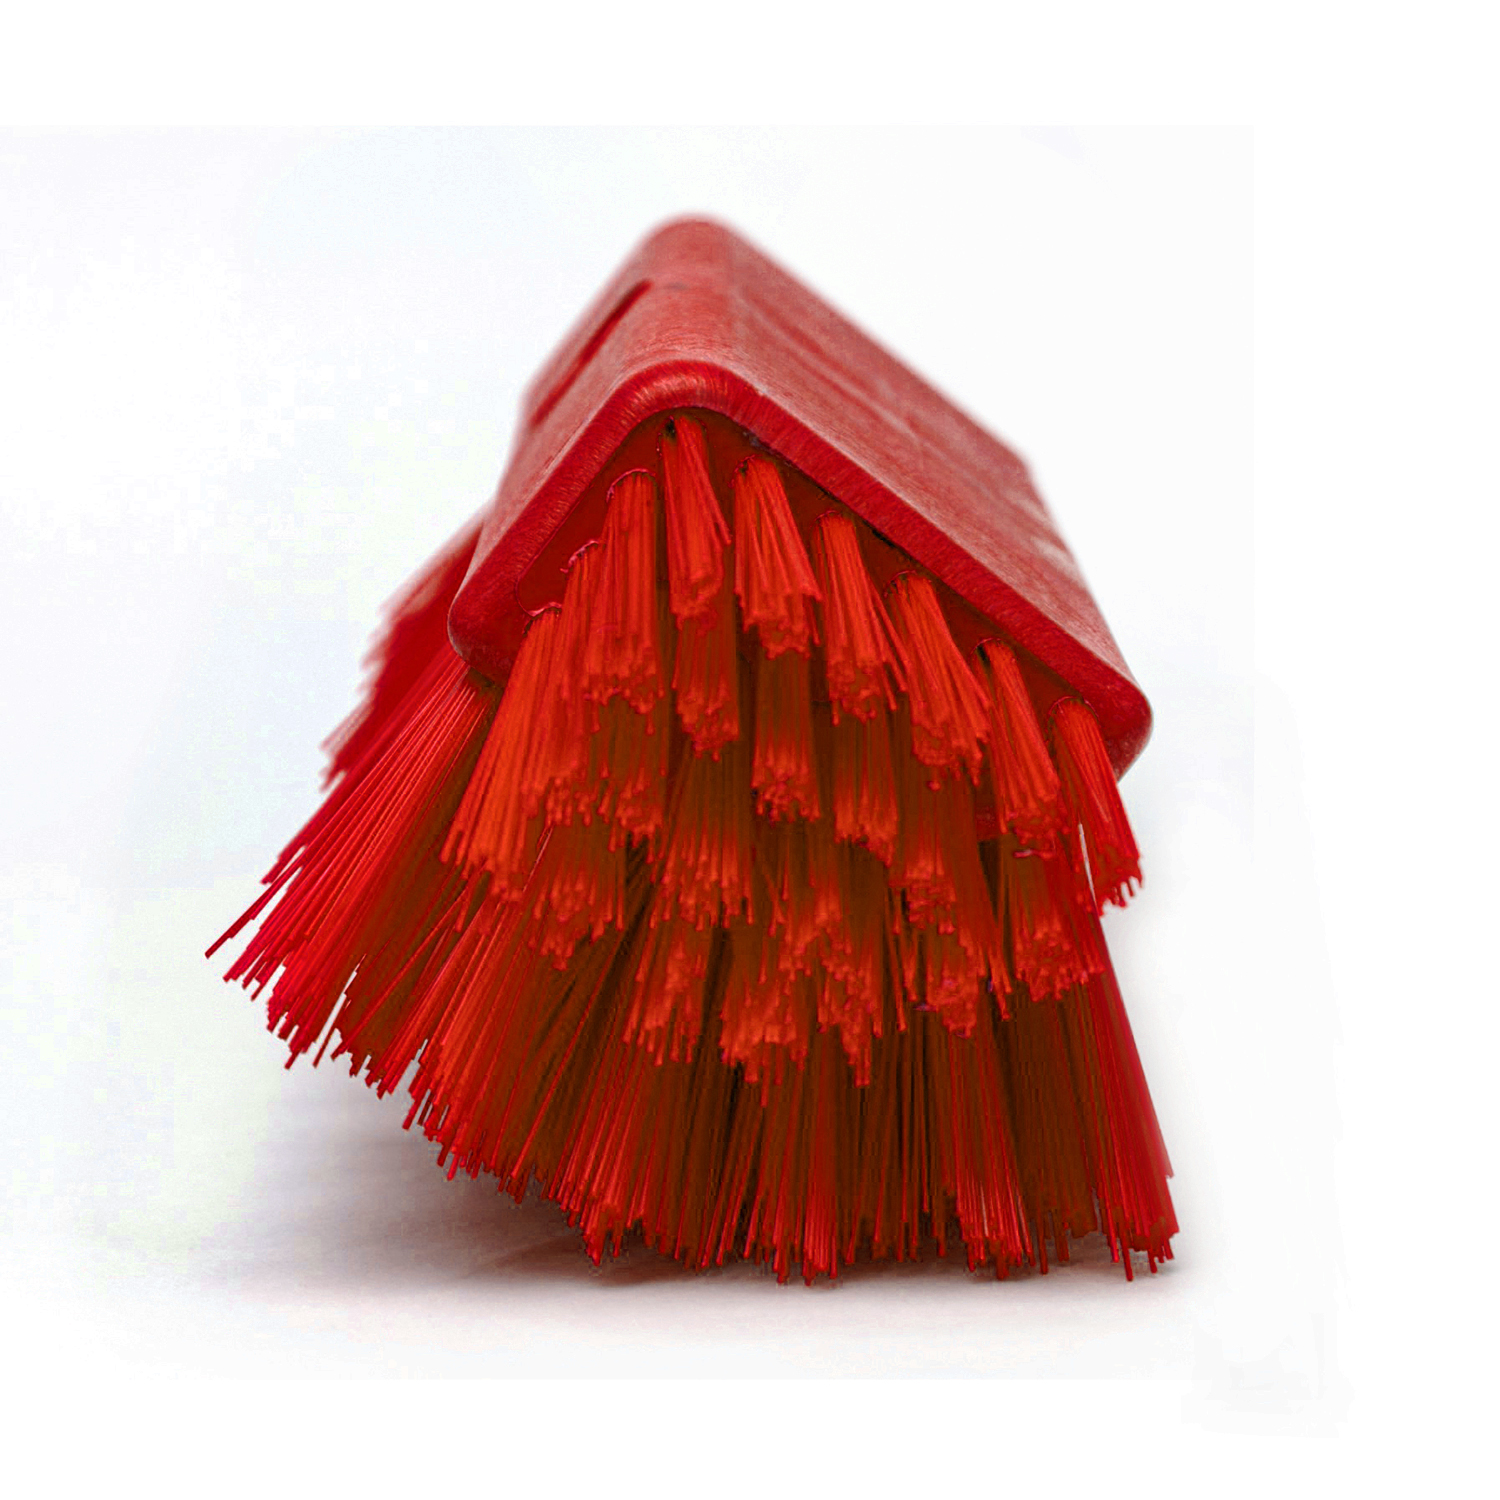 Щетка HACCPER разноуровневая, жесткая, 252 мм, красная